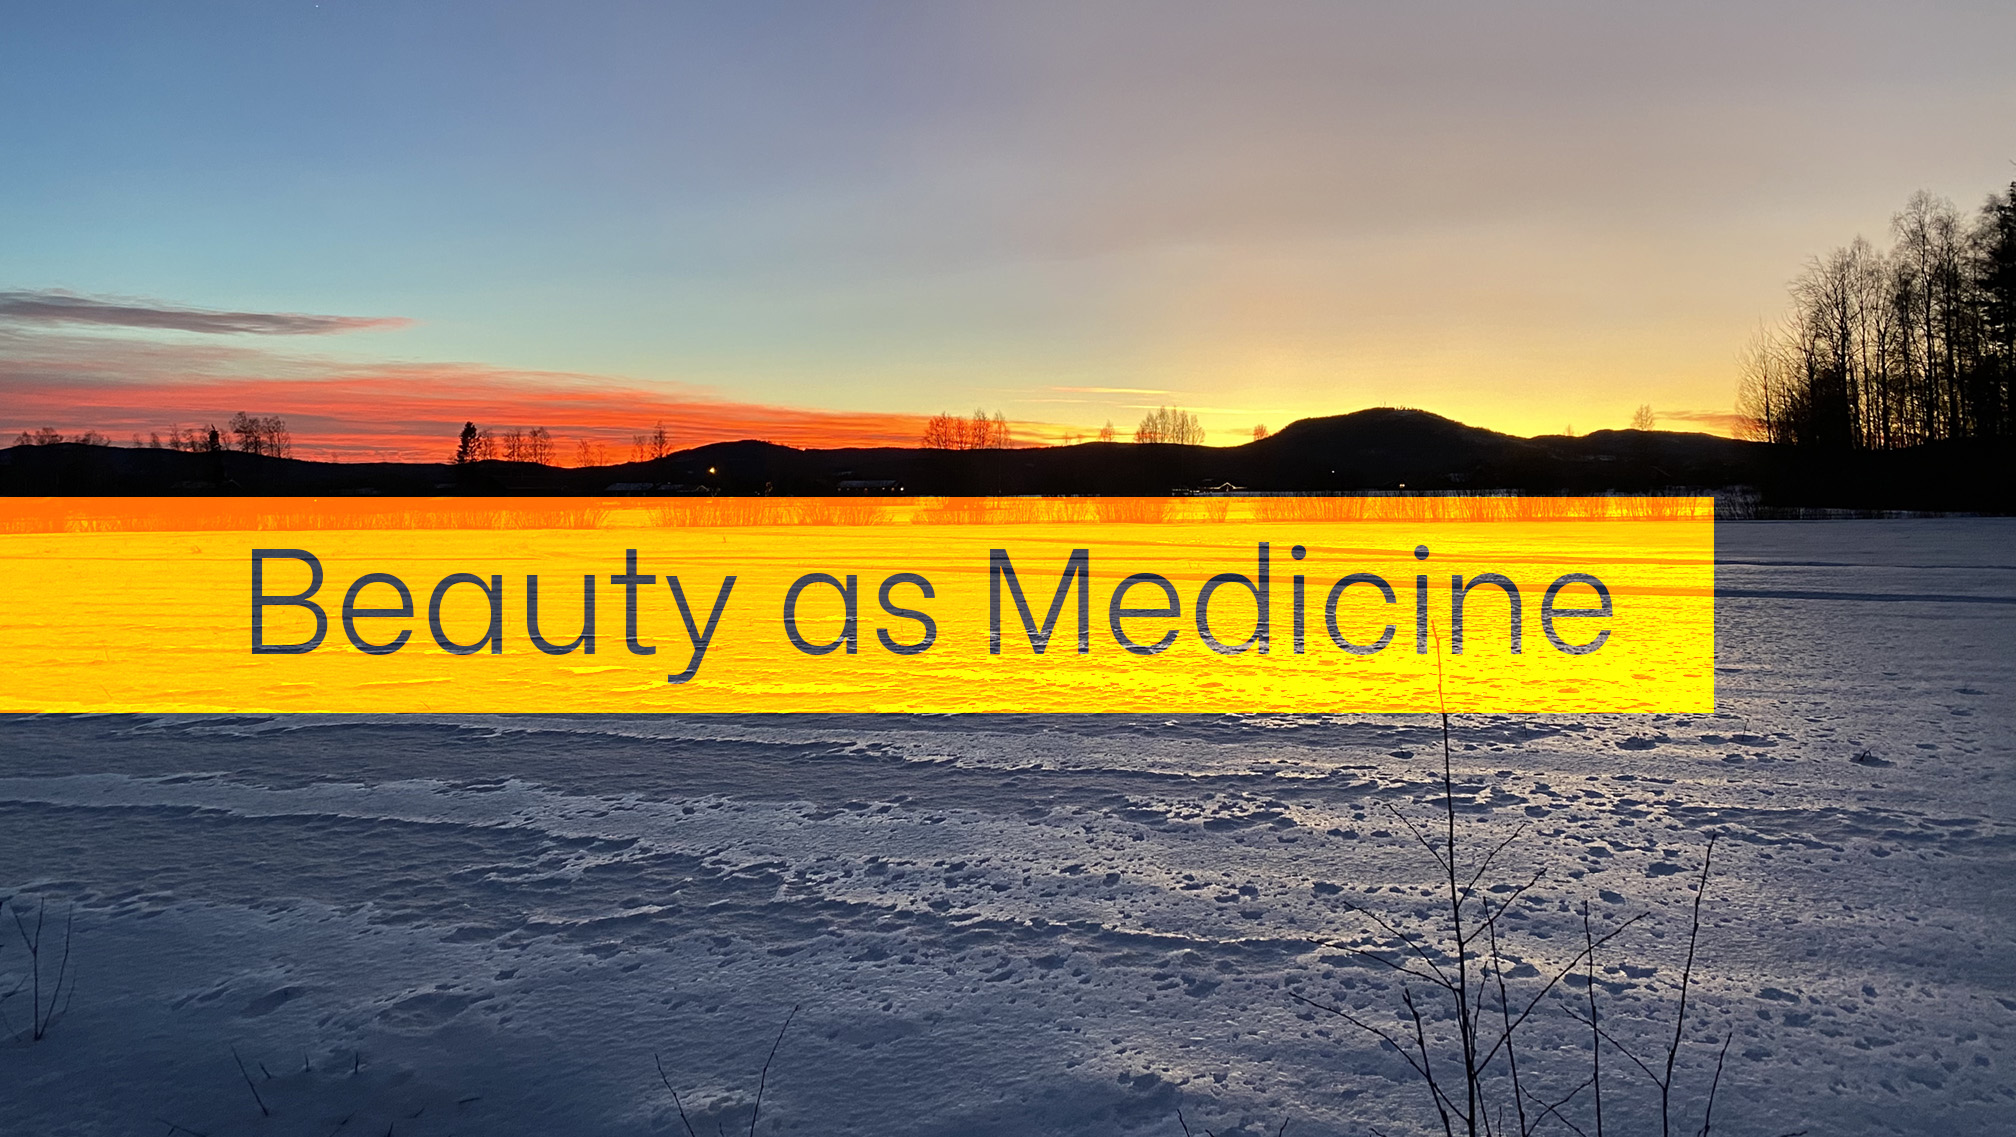 beauty as medicine